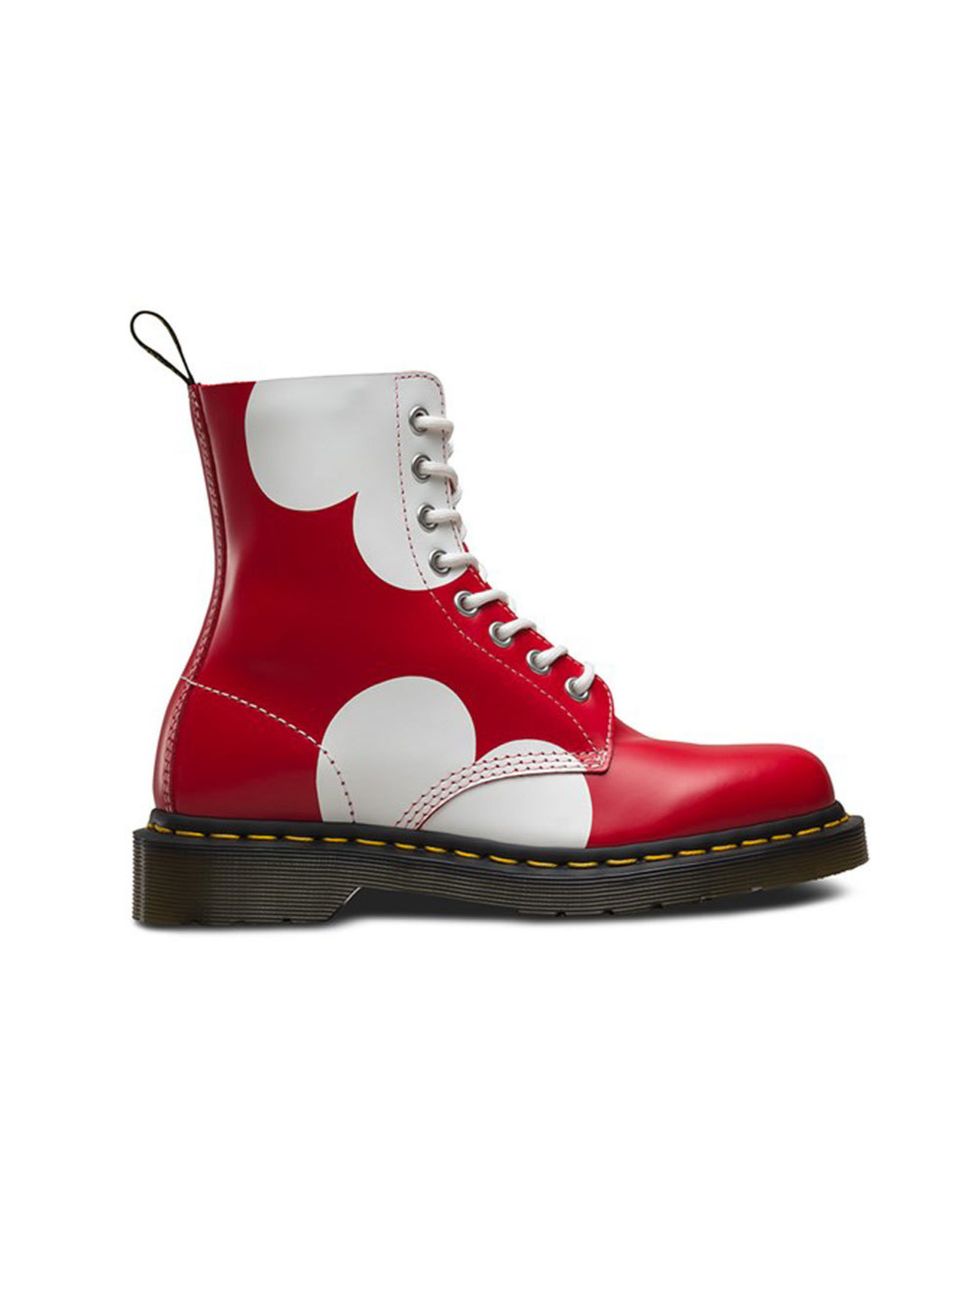 Footwear, Product, Shoe, Boot, White, Carmine, Black, Maroon, Grey, Steel-toe boot, 